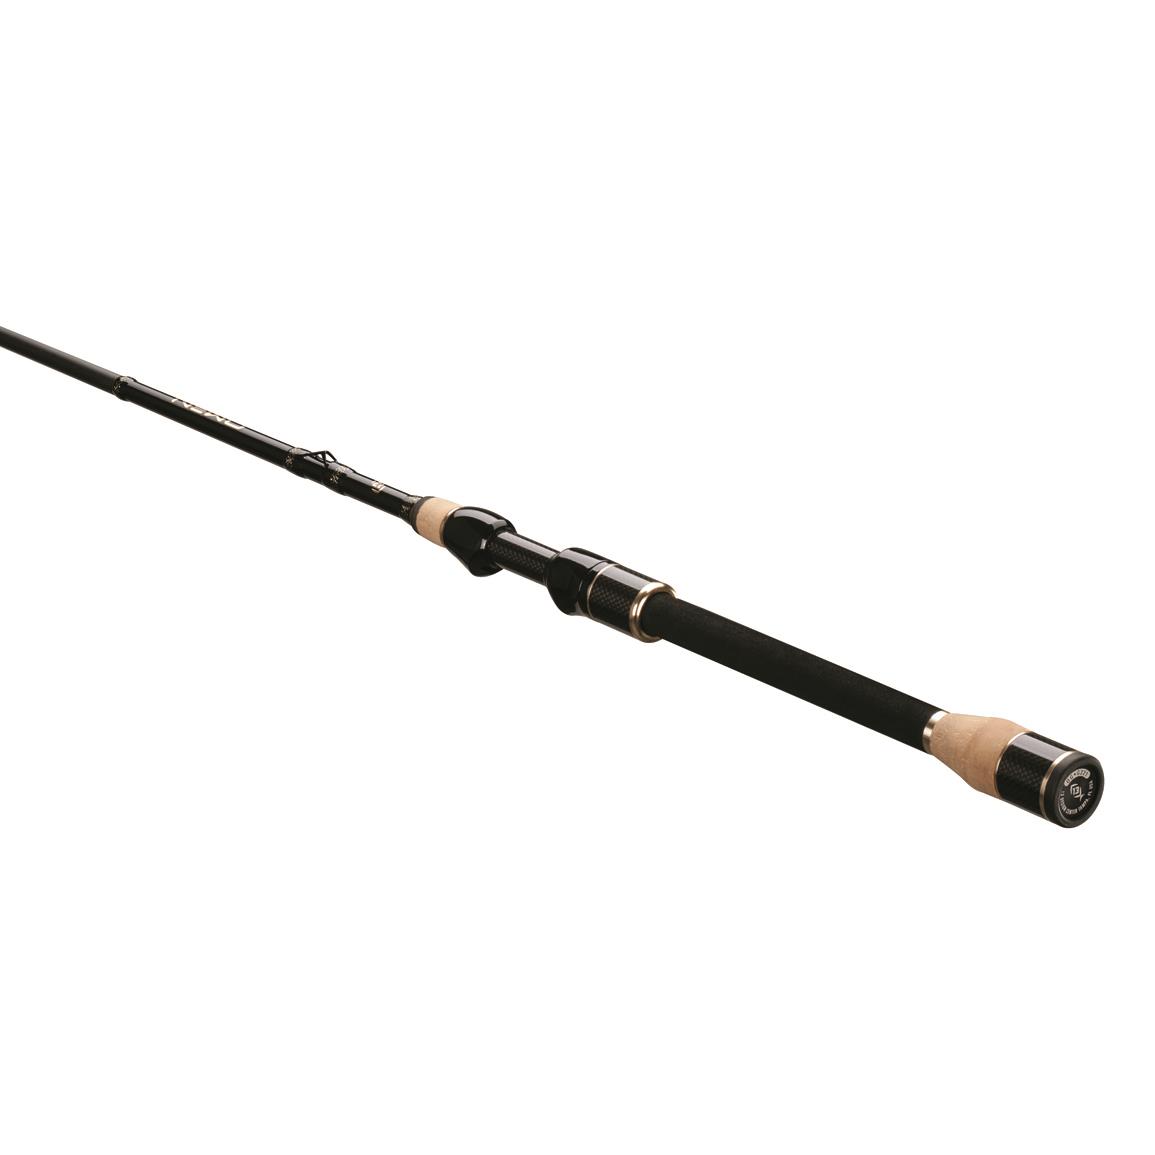 13 Fishing Omen Gold Spinning Rod, 6'6" Length, Medium Power, Fast Action